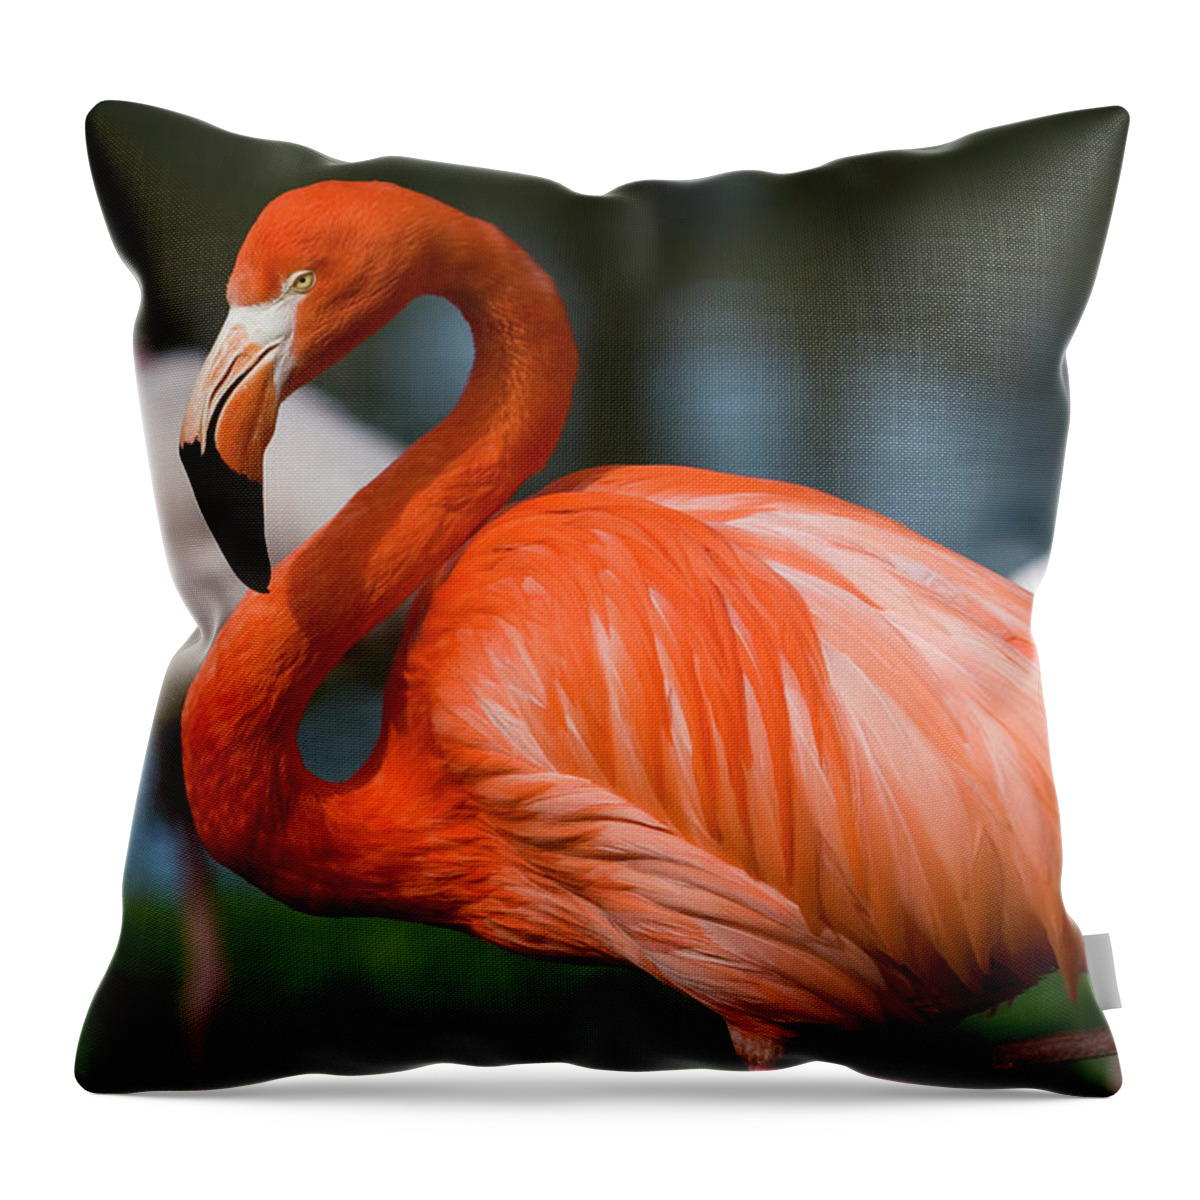 Orange Color Throw Pillow featuring the photograph Flamingo by Gosiek-b